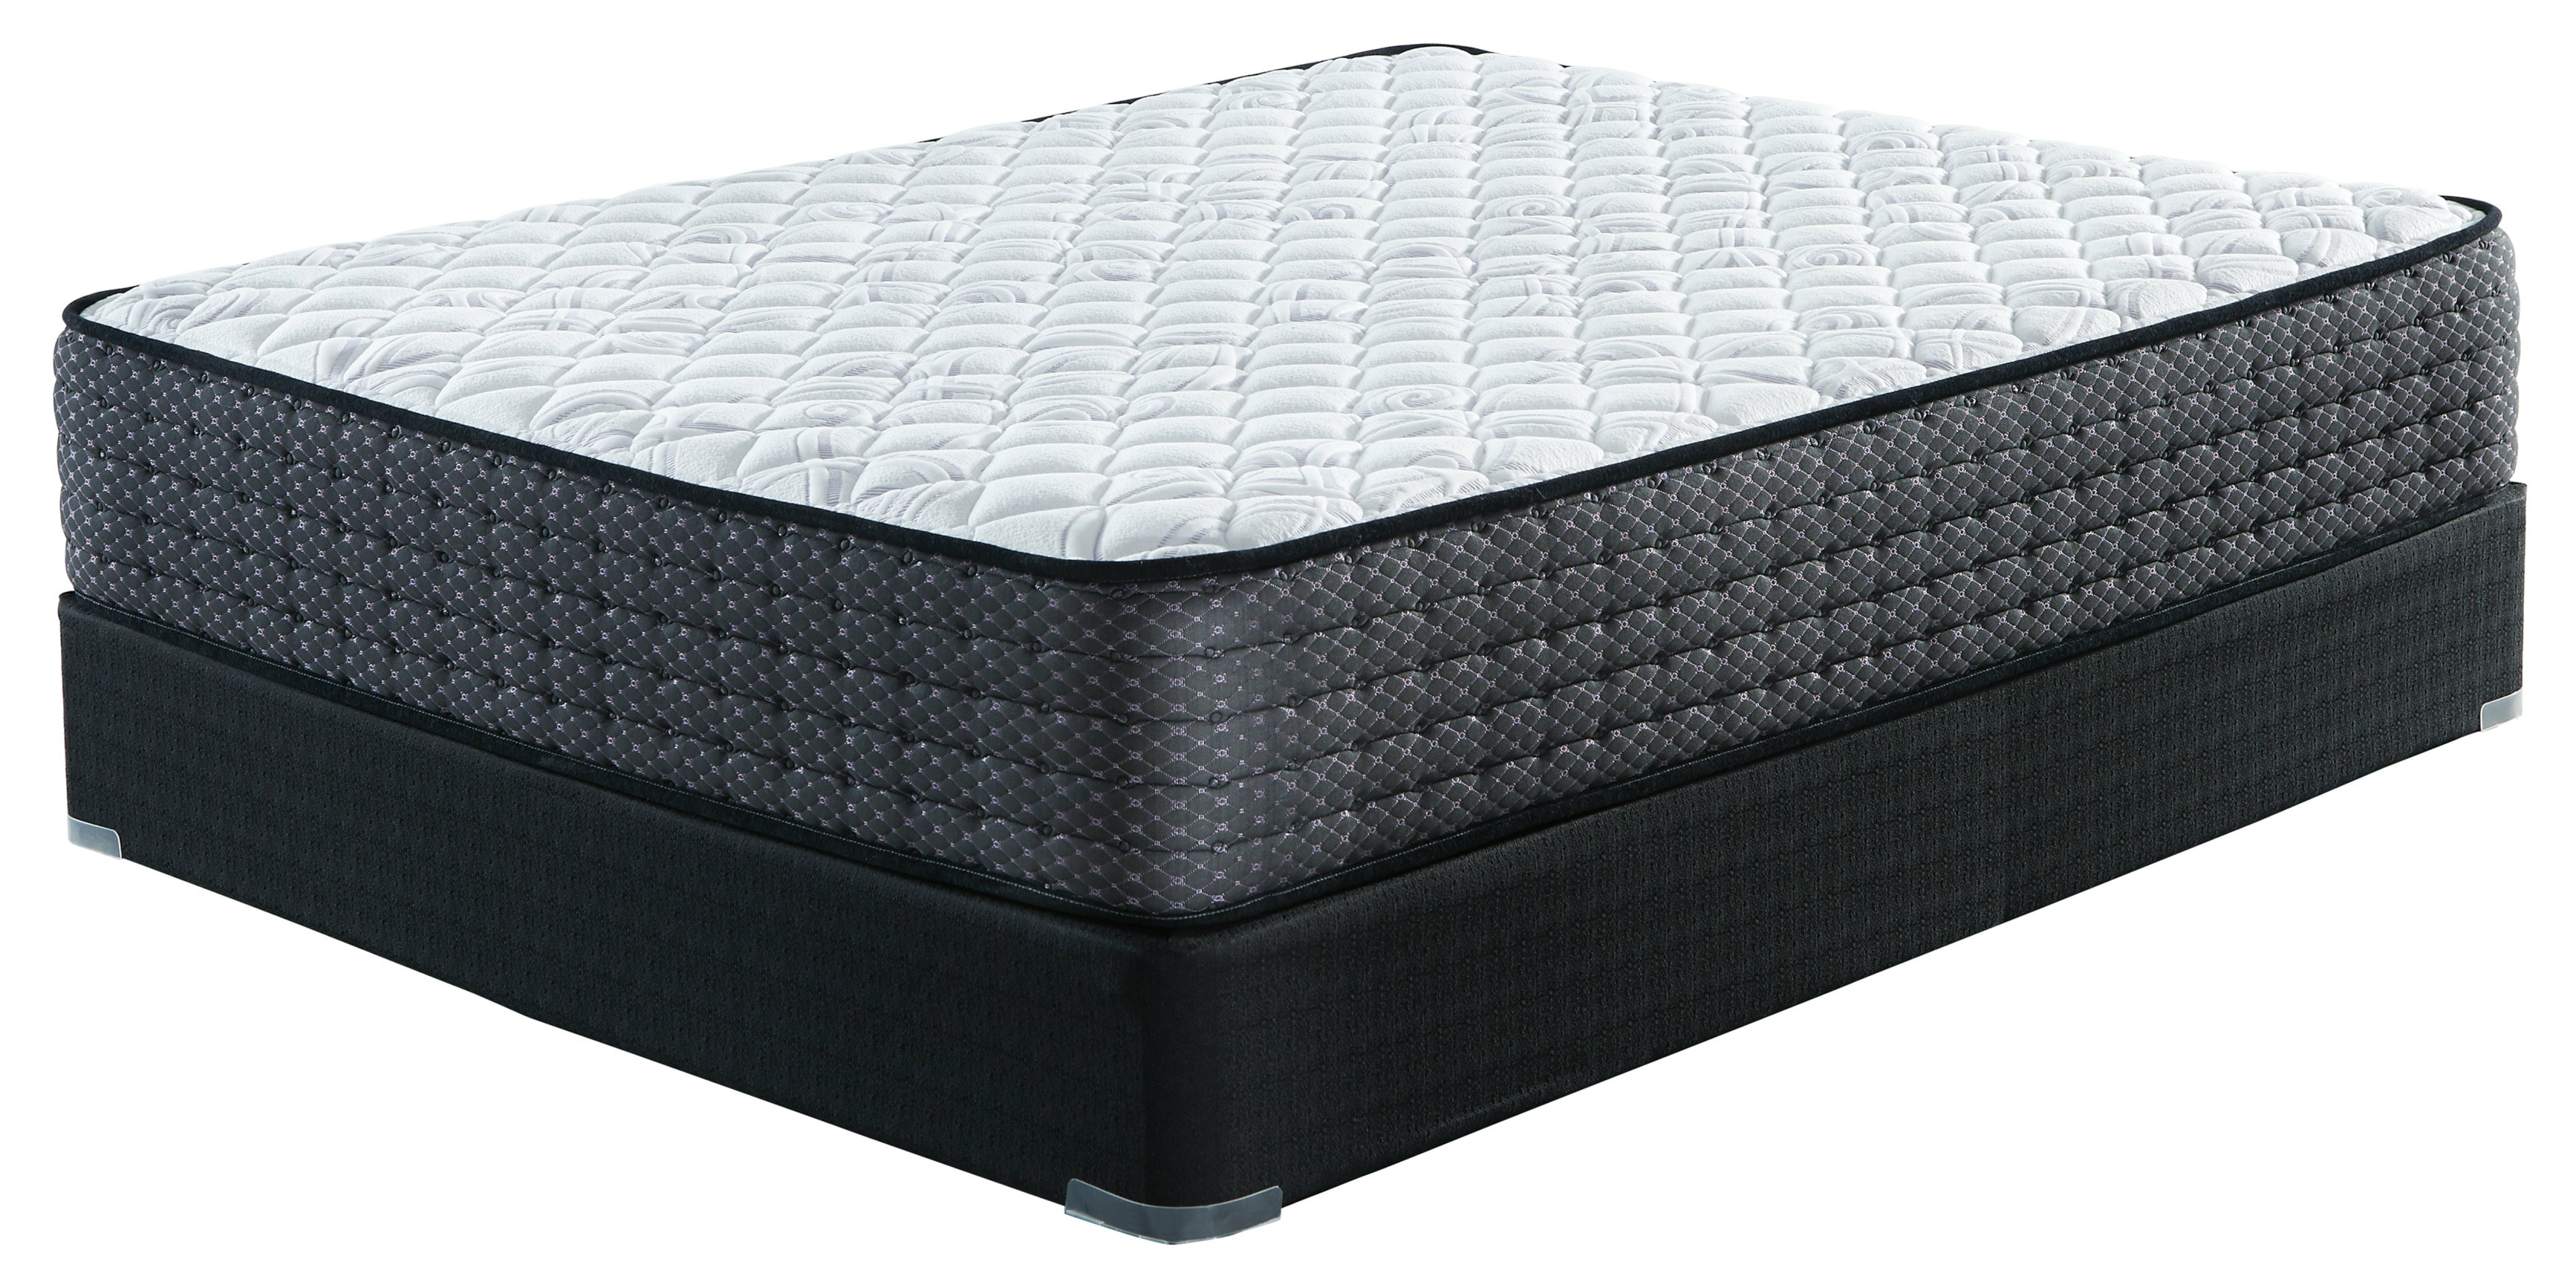 sierra sleep limited edition plush mattress reviews